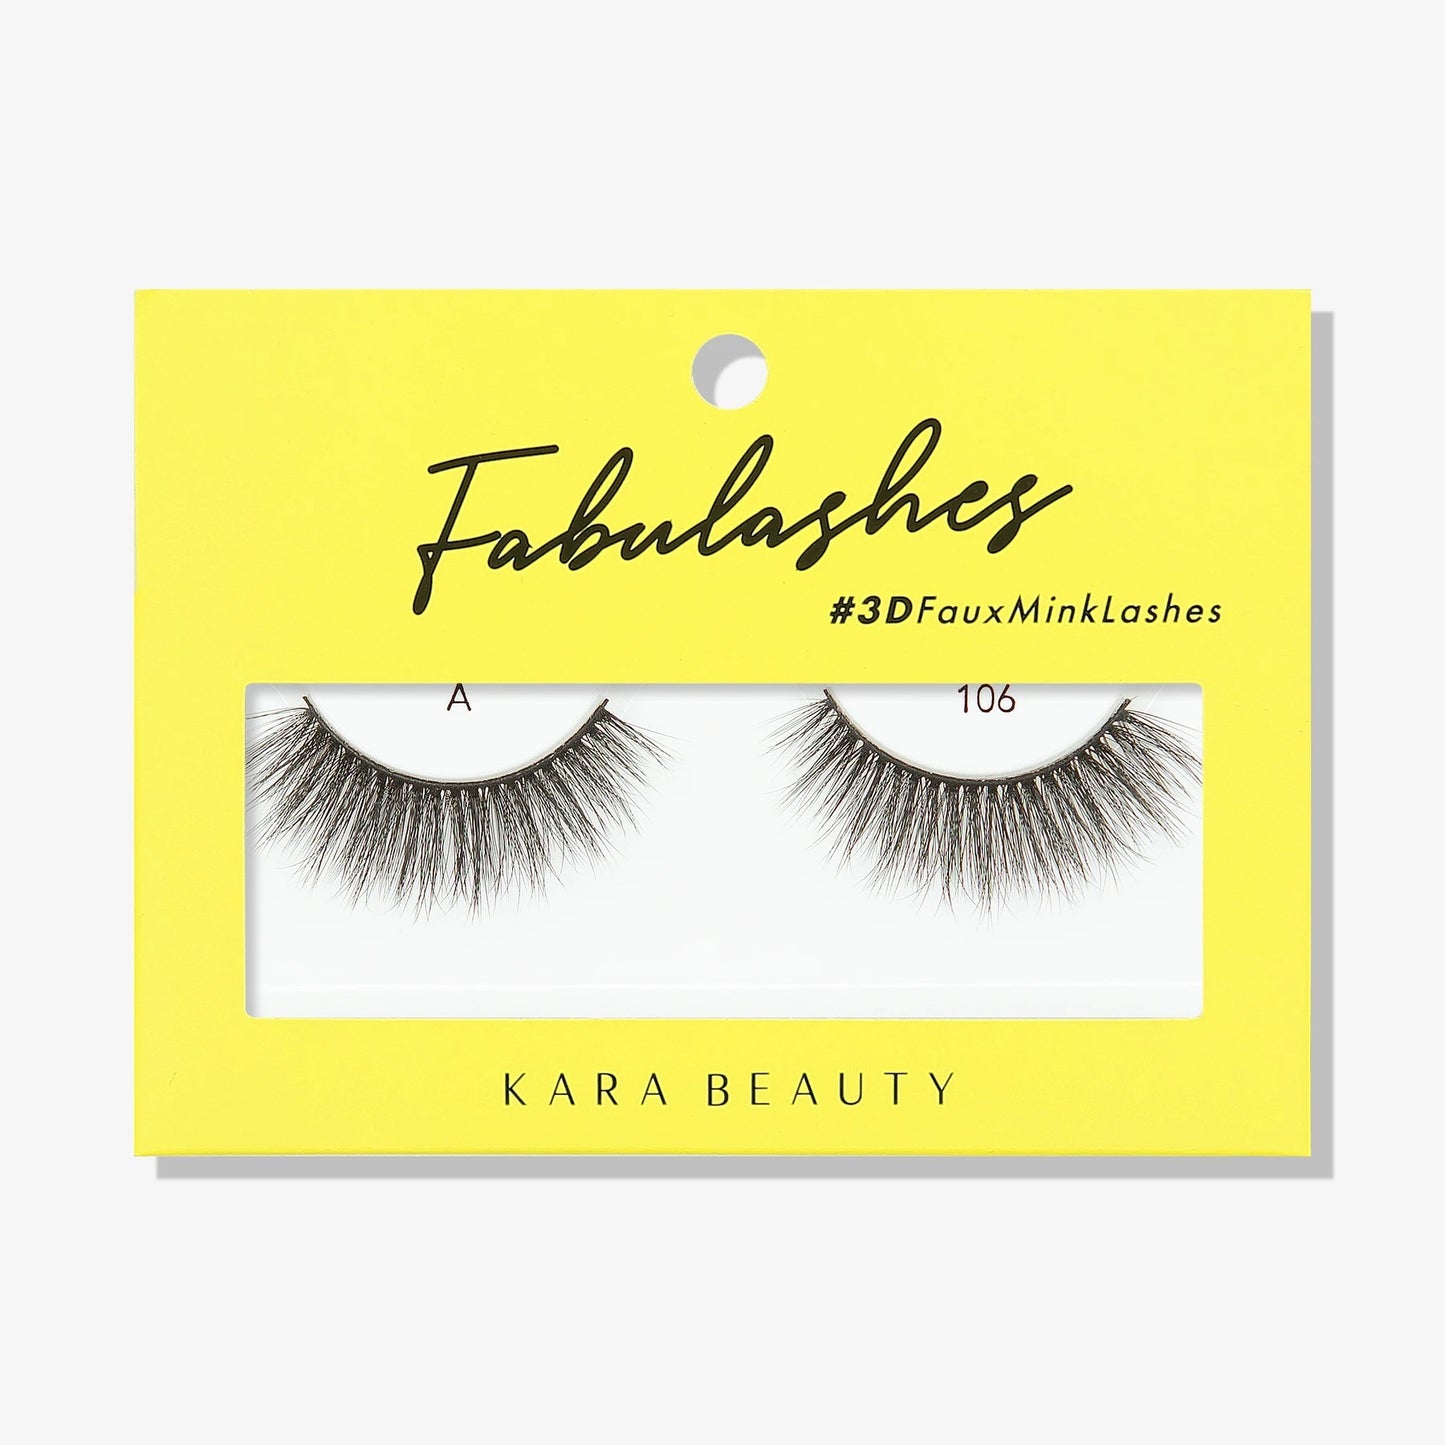 Kara Beauty Fabulashes 3D Faux Mink Lashes